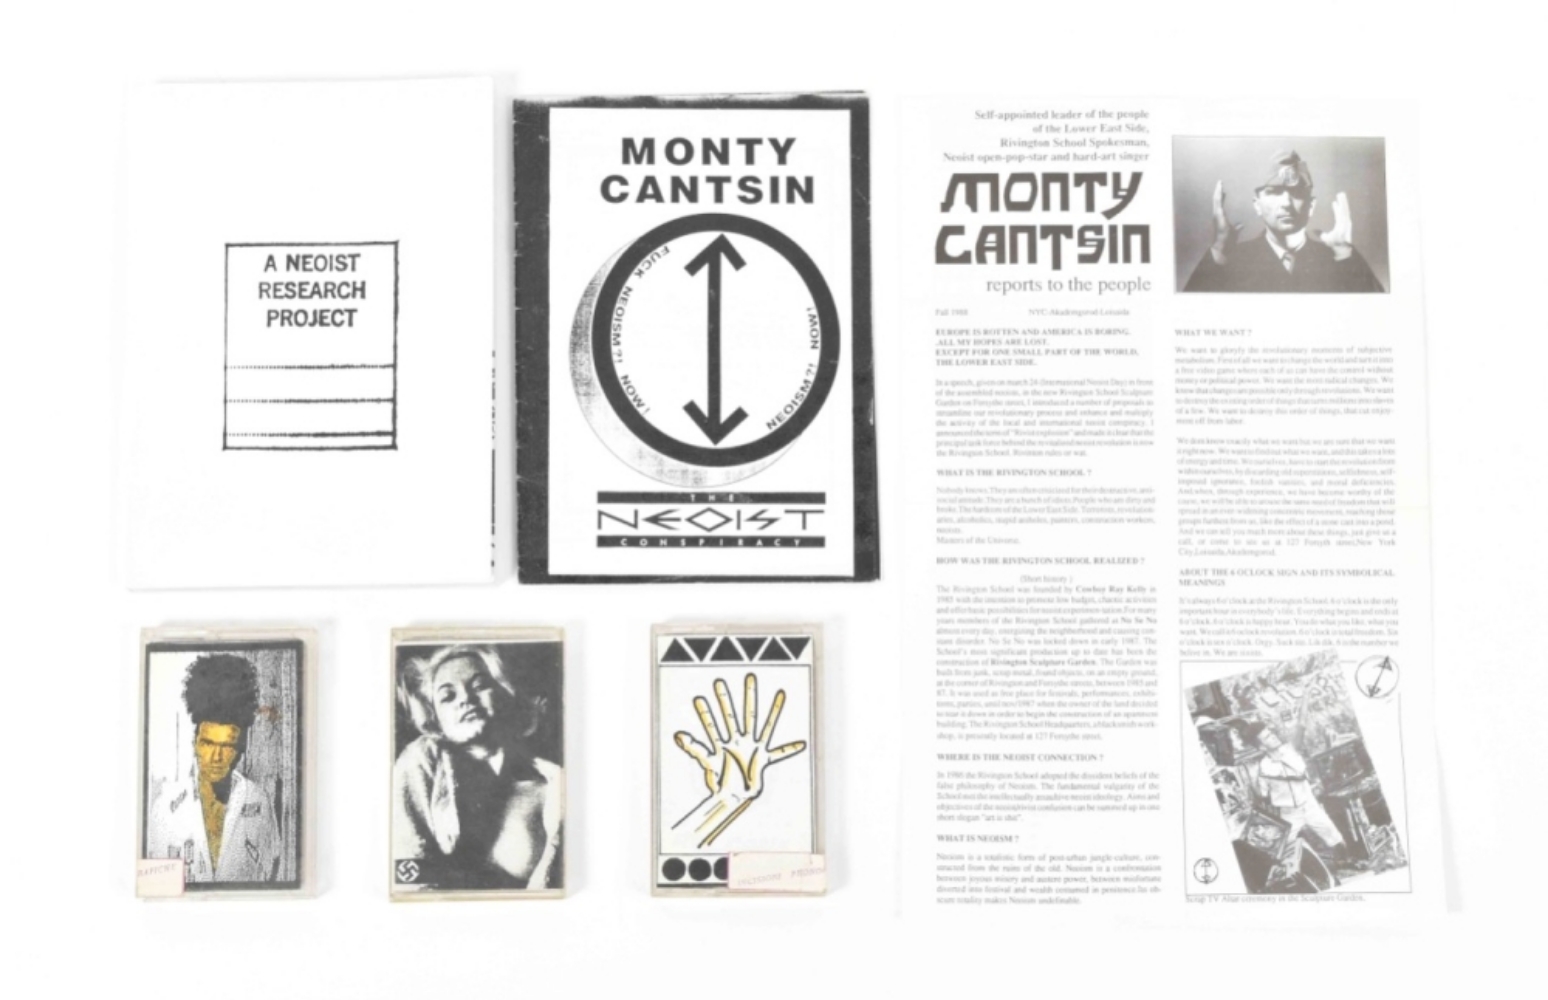 [Situationists] Monty Cantsin, Neoism